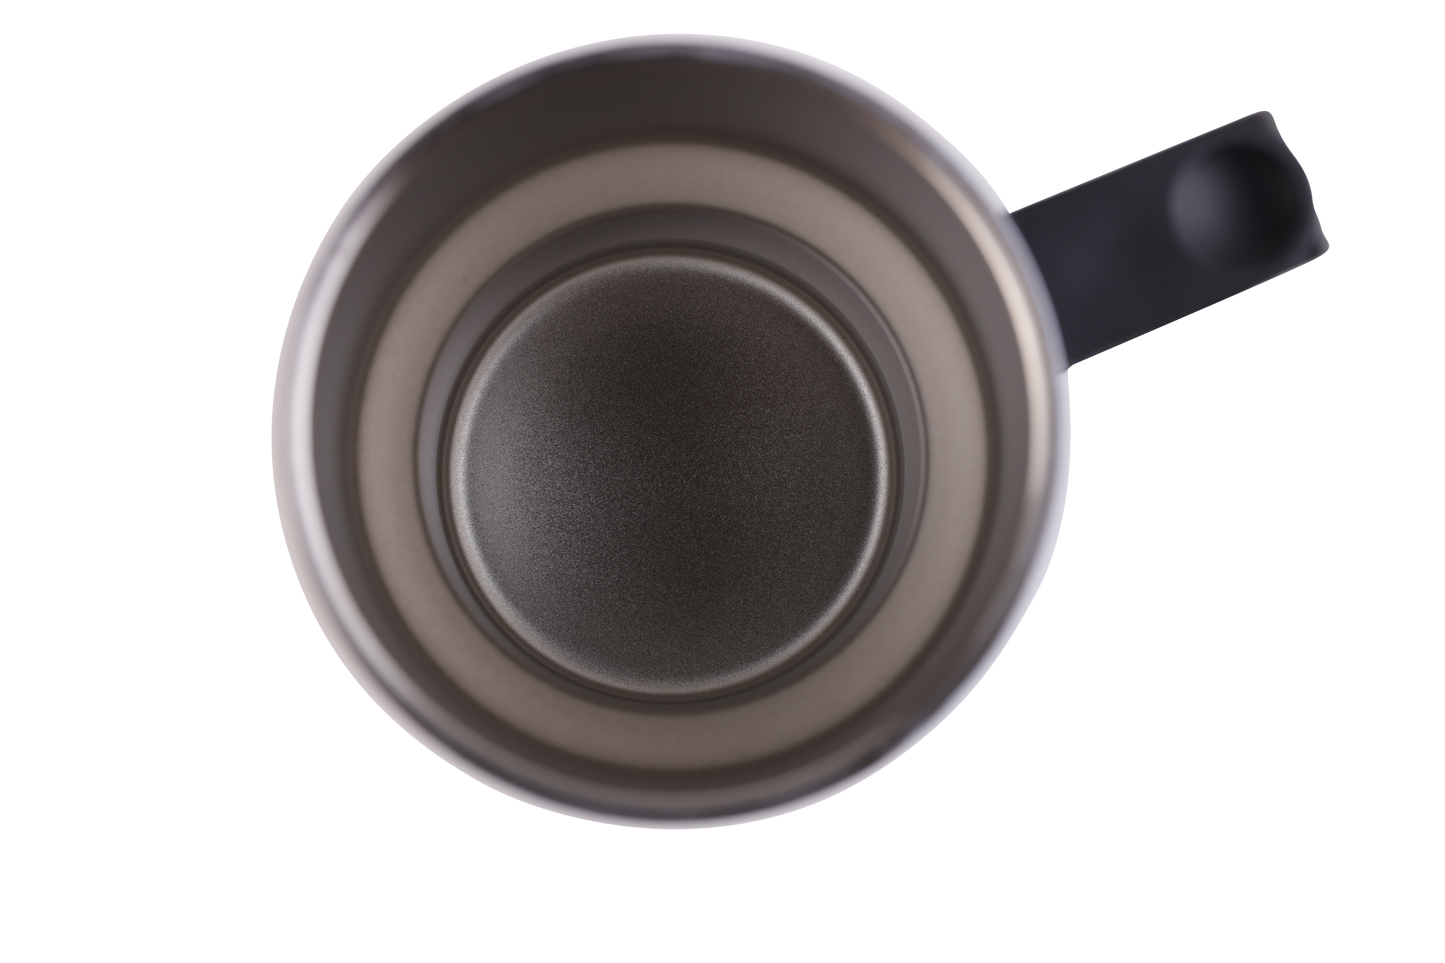 14 stainless steel, white Color,Size: 14oz travel mug (black lids)(unit)